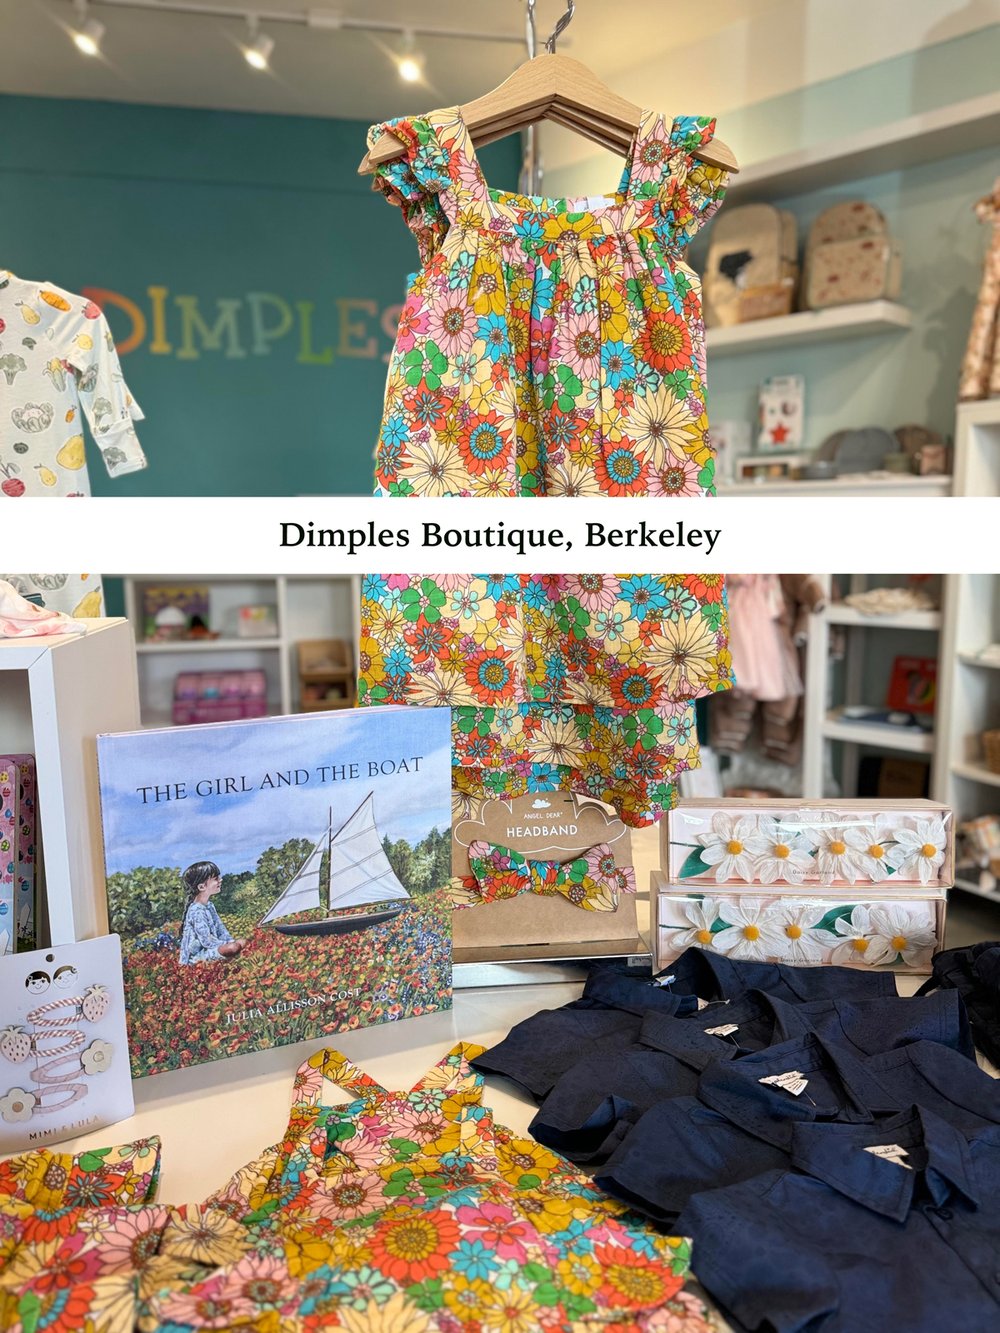 Dimples-boutique-Berkeley.jpg